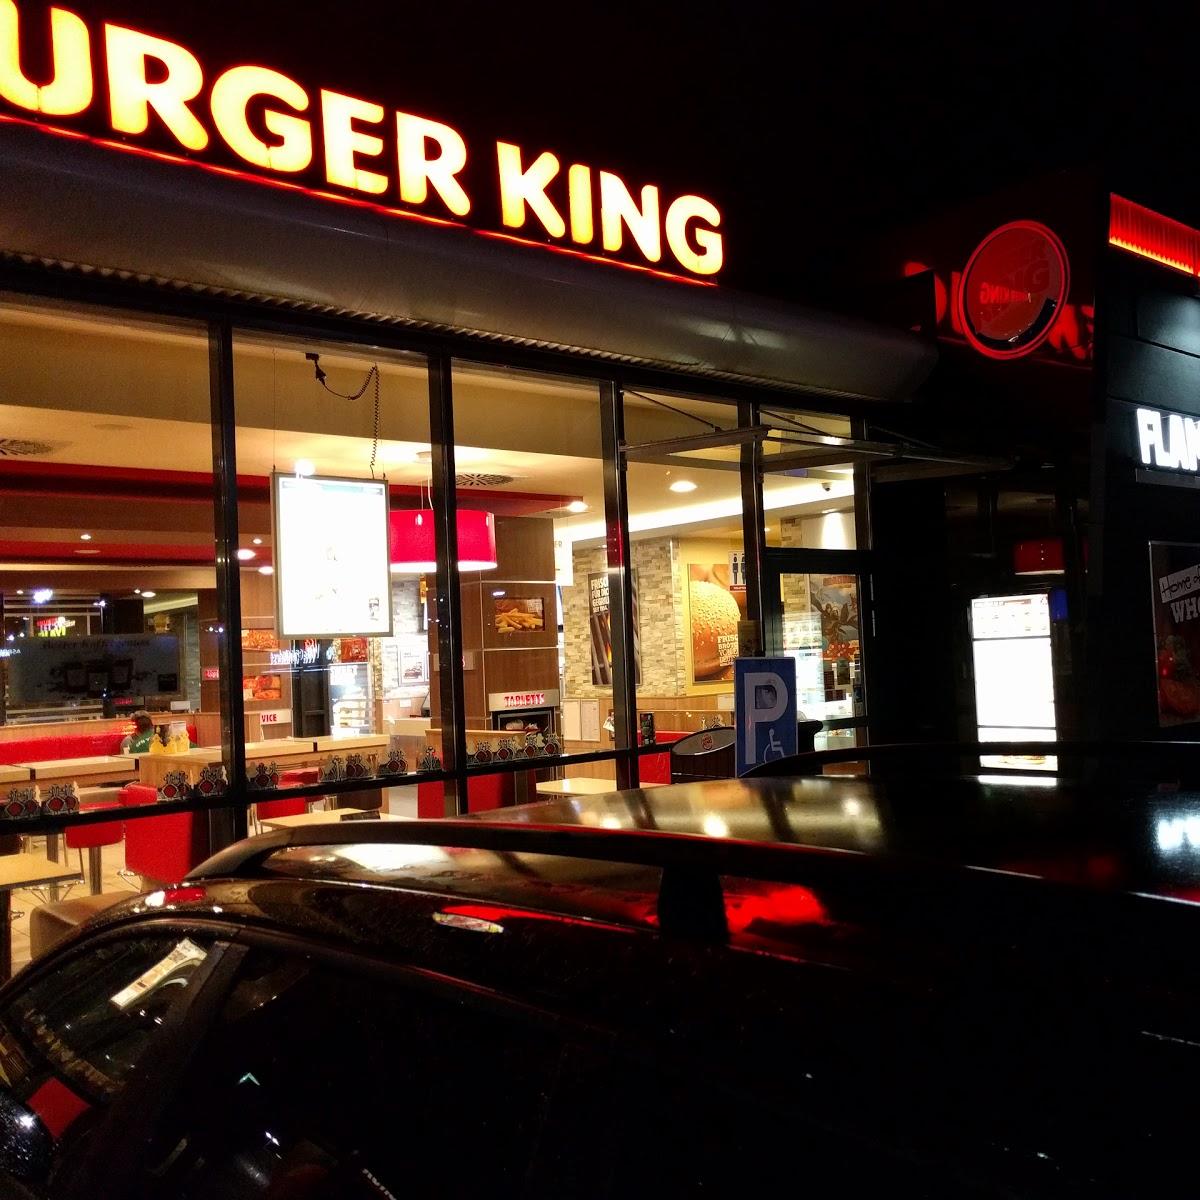 Restaurant "Burger King" in Vechta